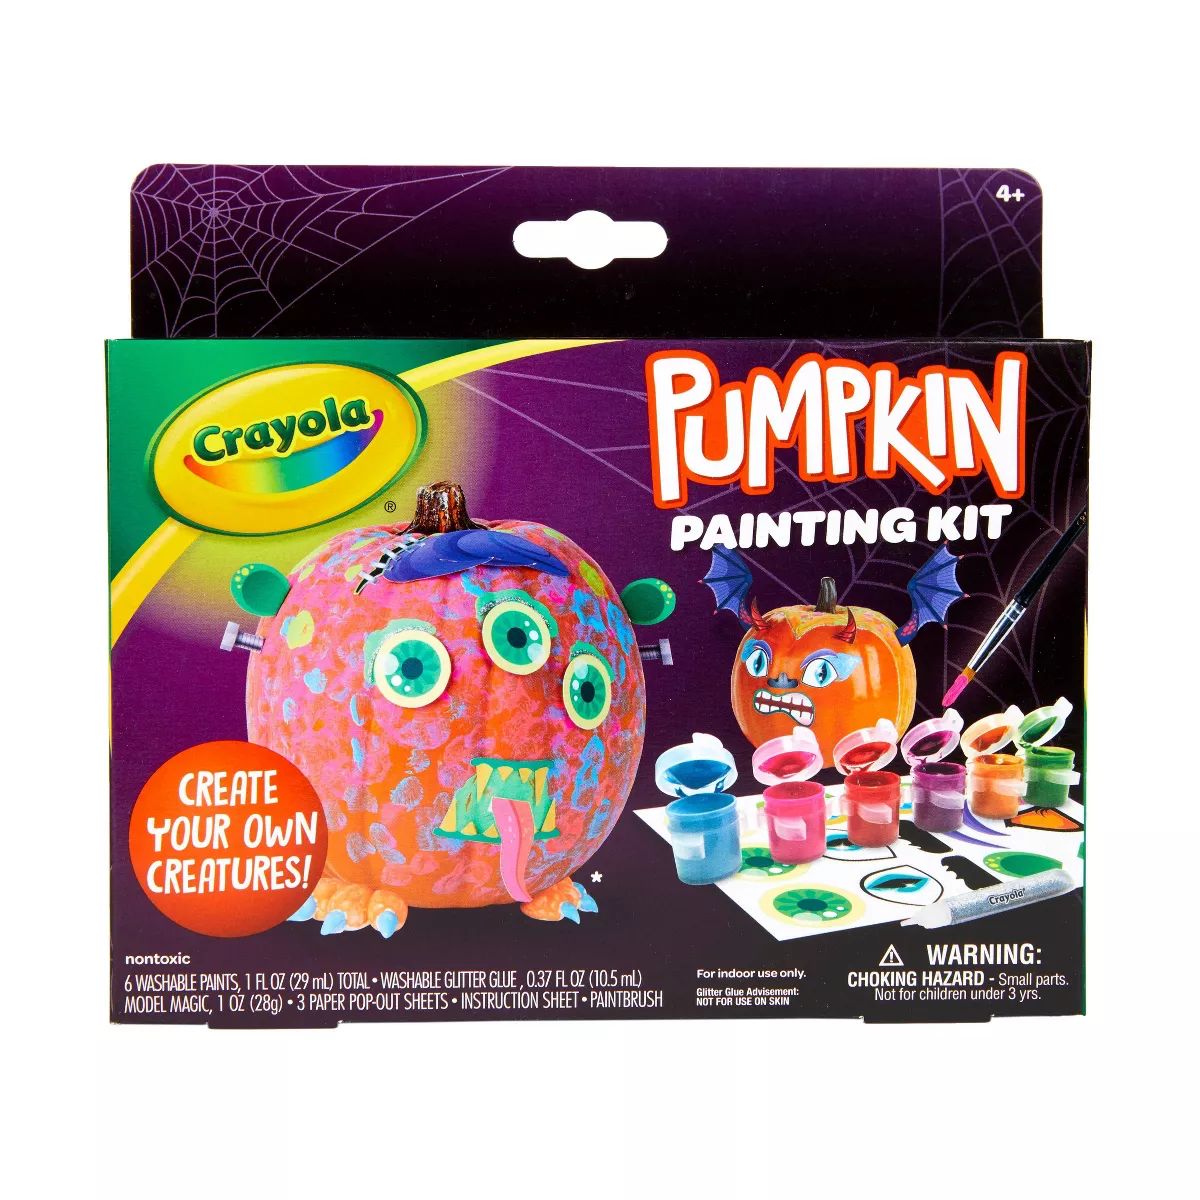 Crayola Pumpkin Painting Kit - Monster | Target